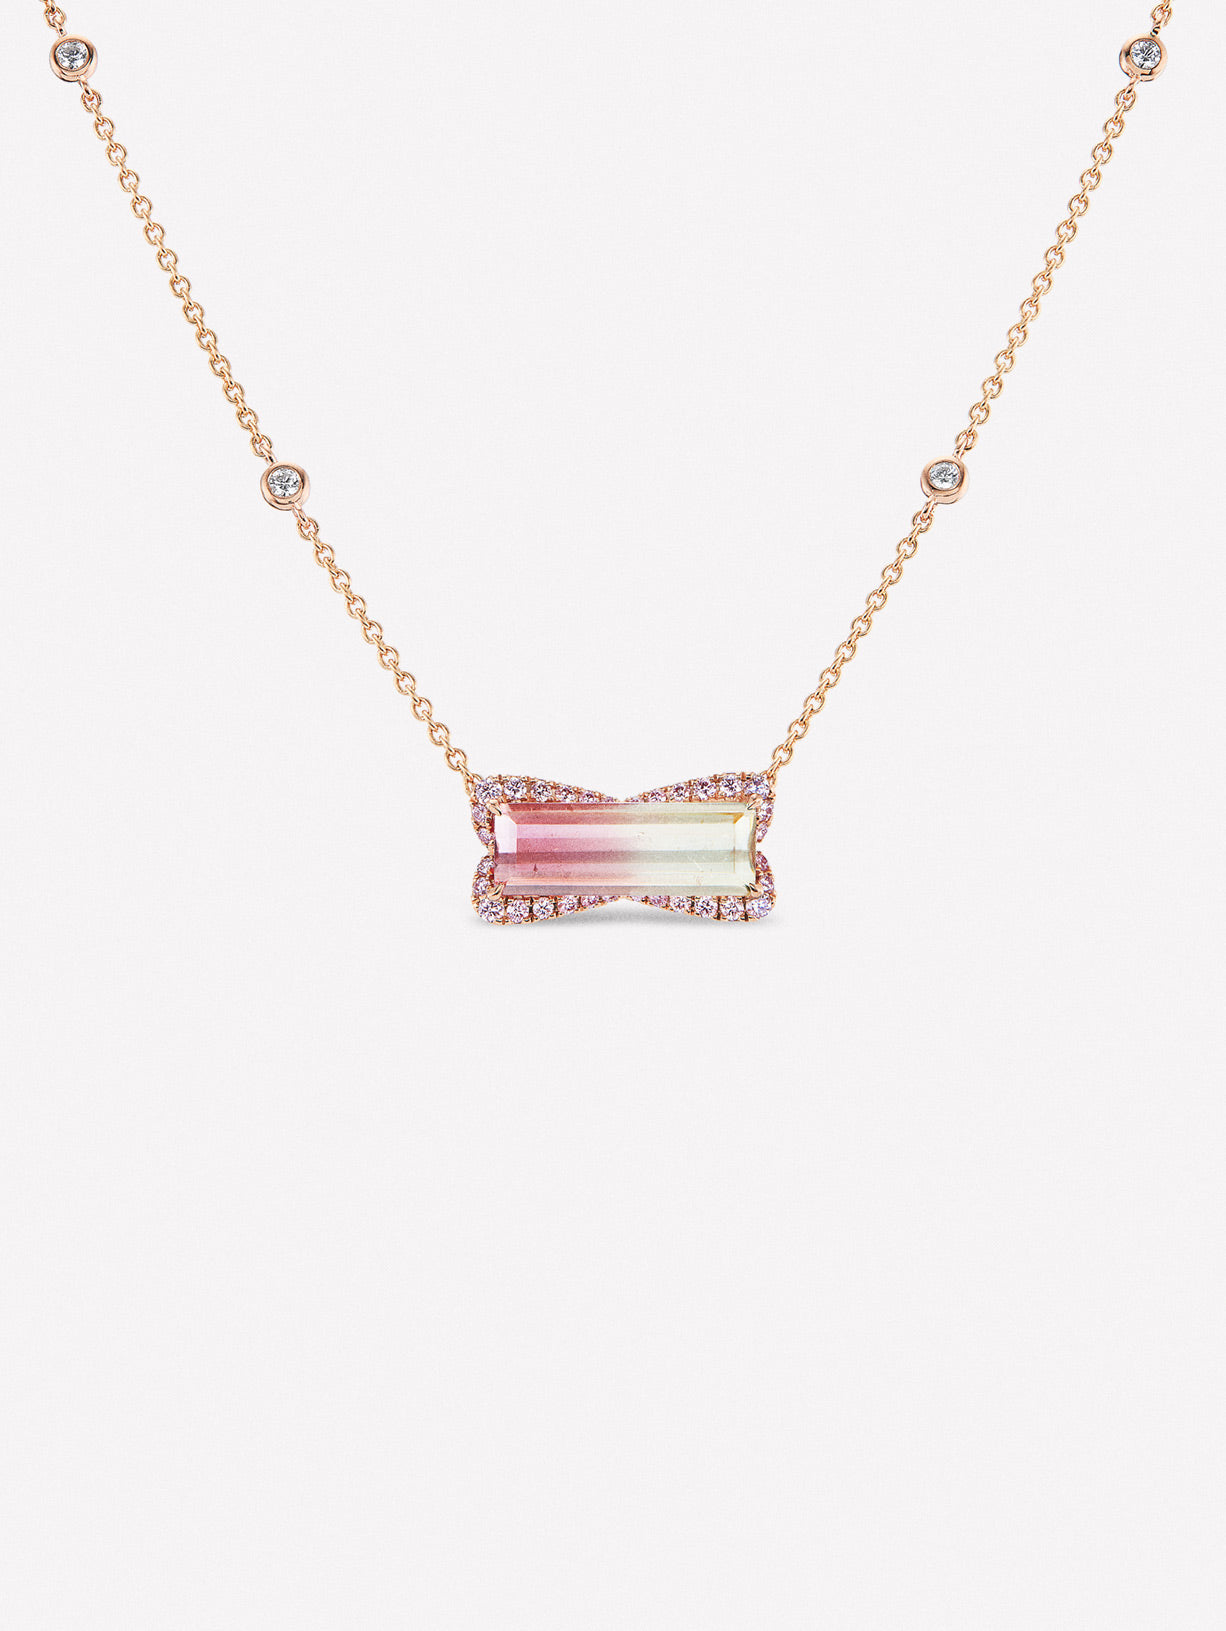 Bi-color Tourmaline and Pink Diamond Necklace by JFINE